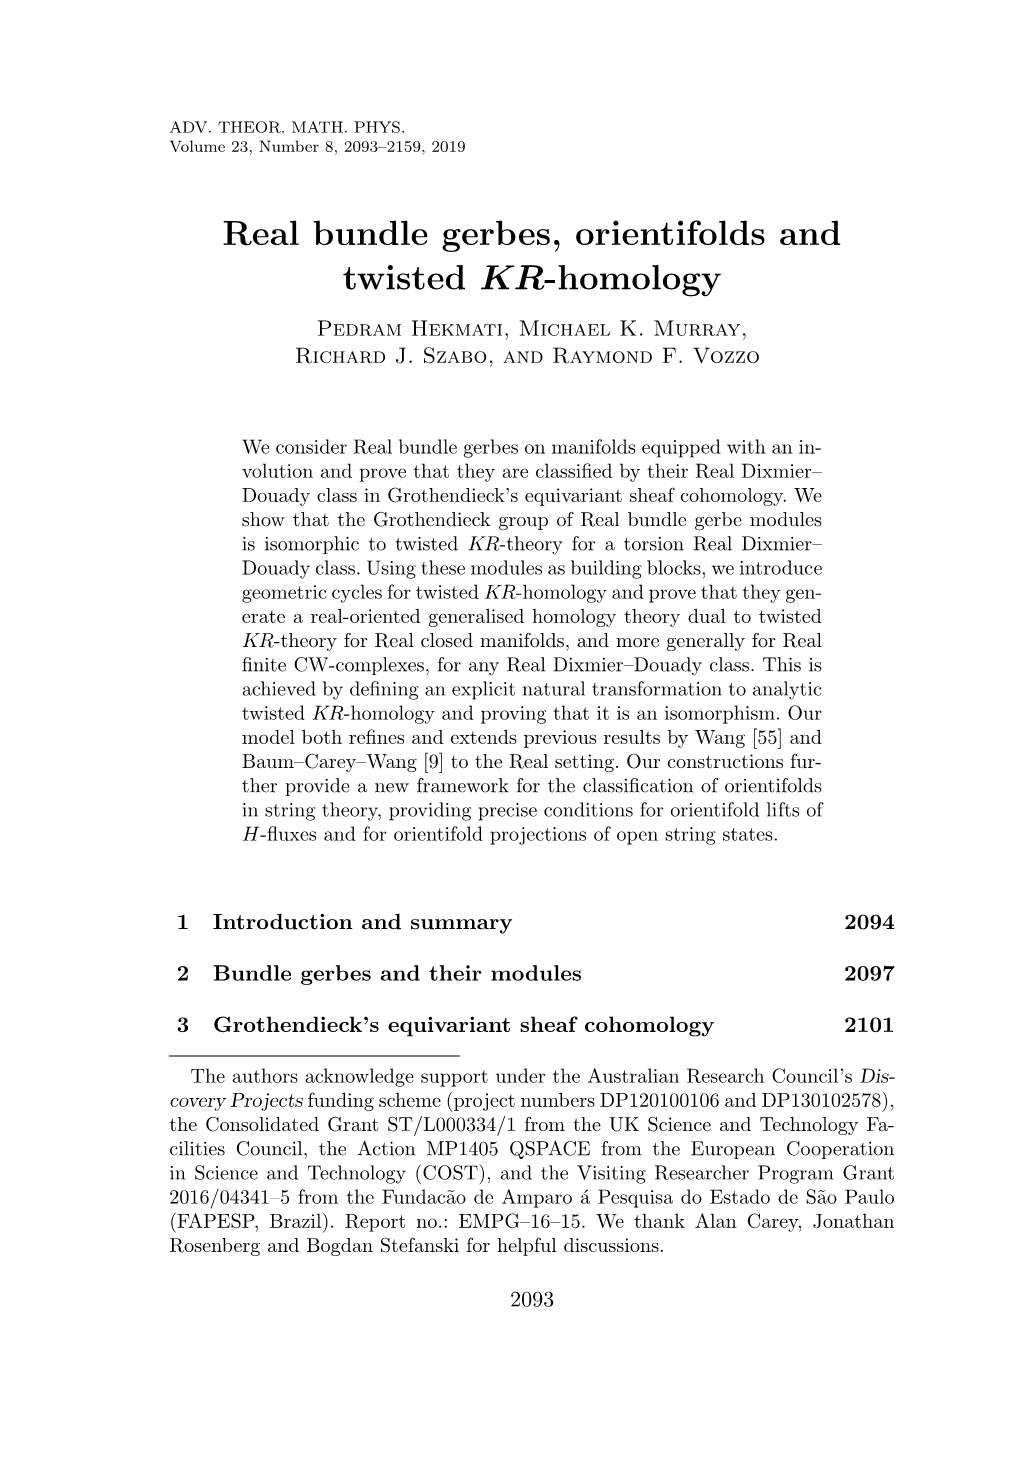 Real Bundle Gerbes, Orientifolds and Twisted KR-Homology Pedram Hekmati, Michael K